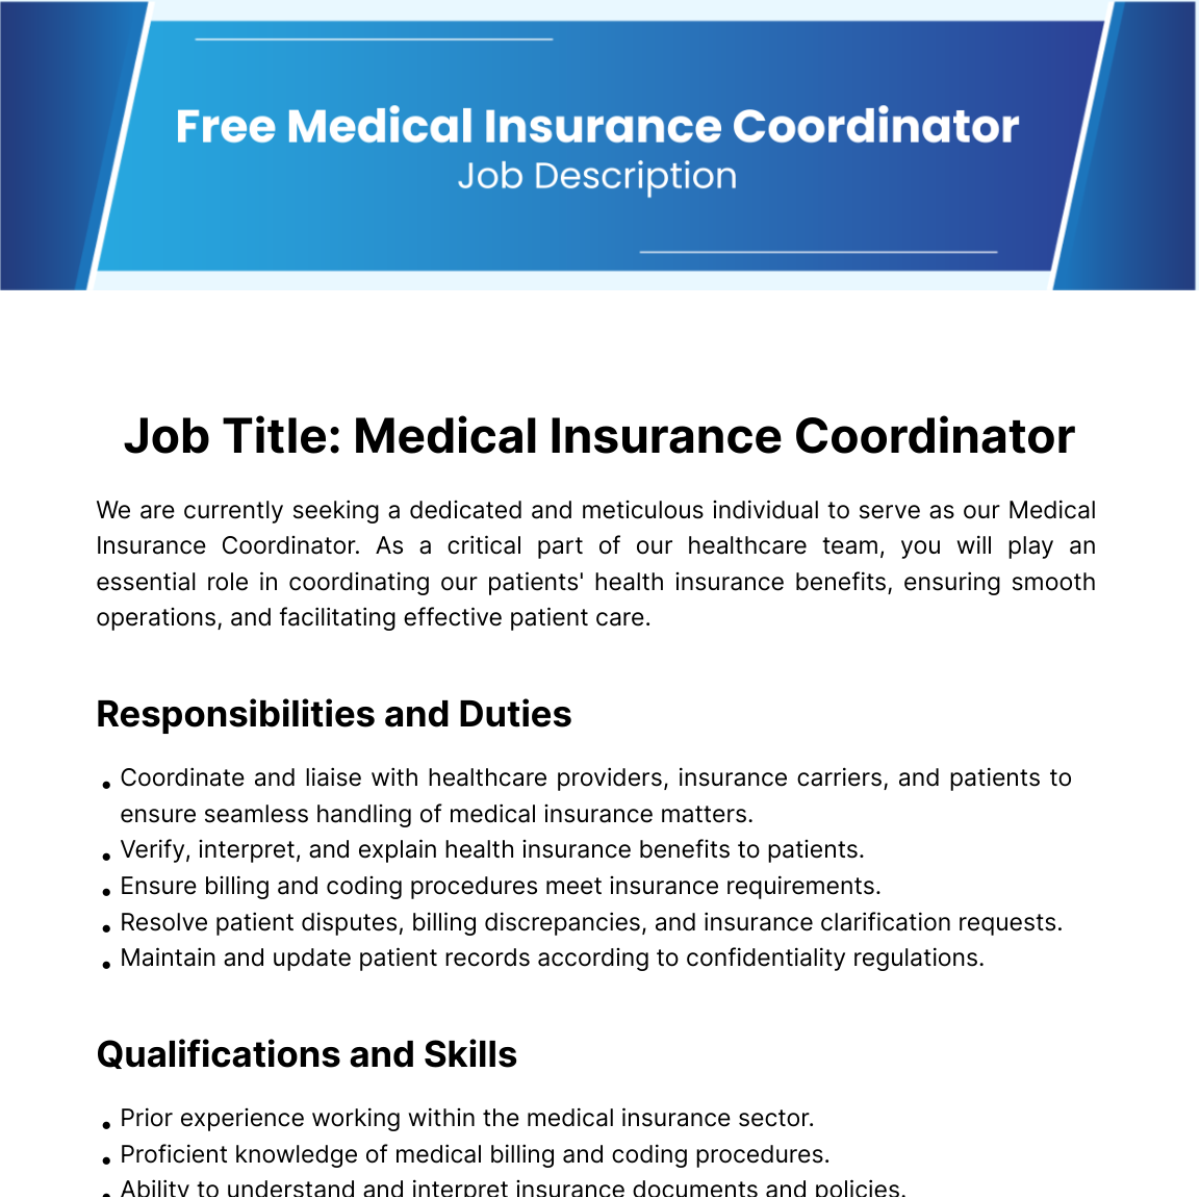 Medical Insurance Coordinator Job Description Template